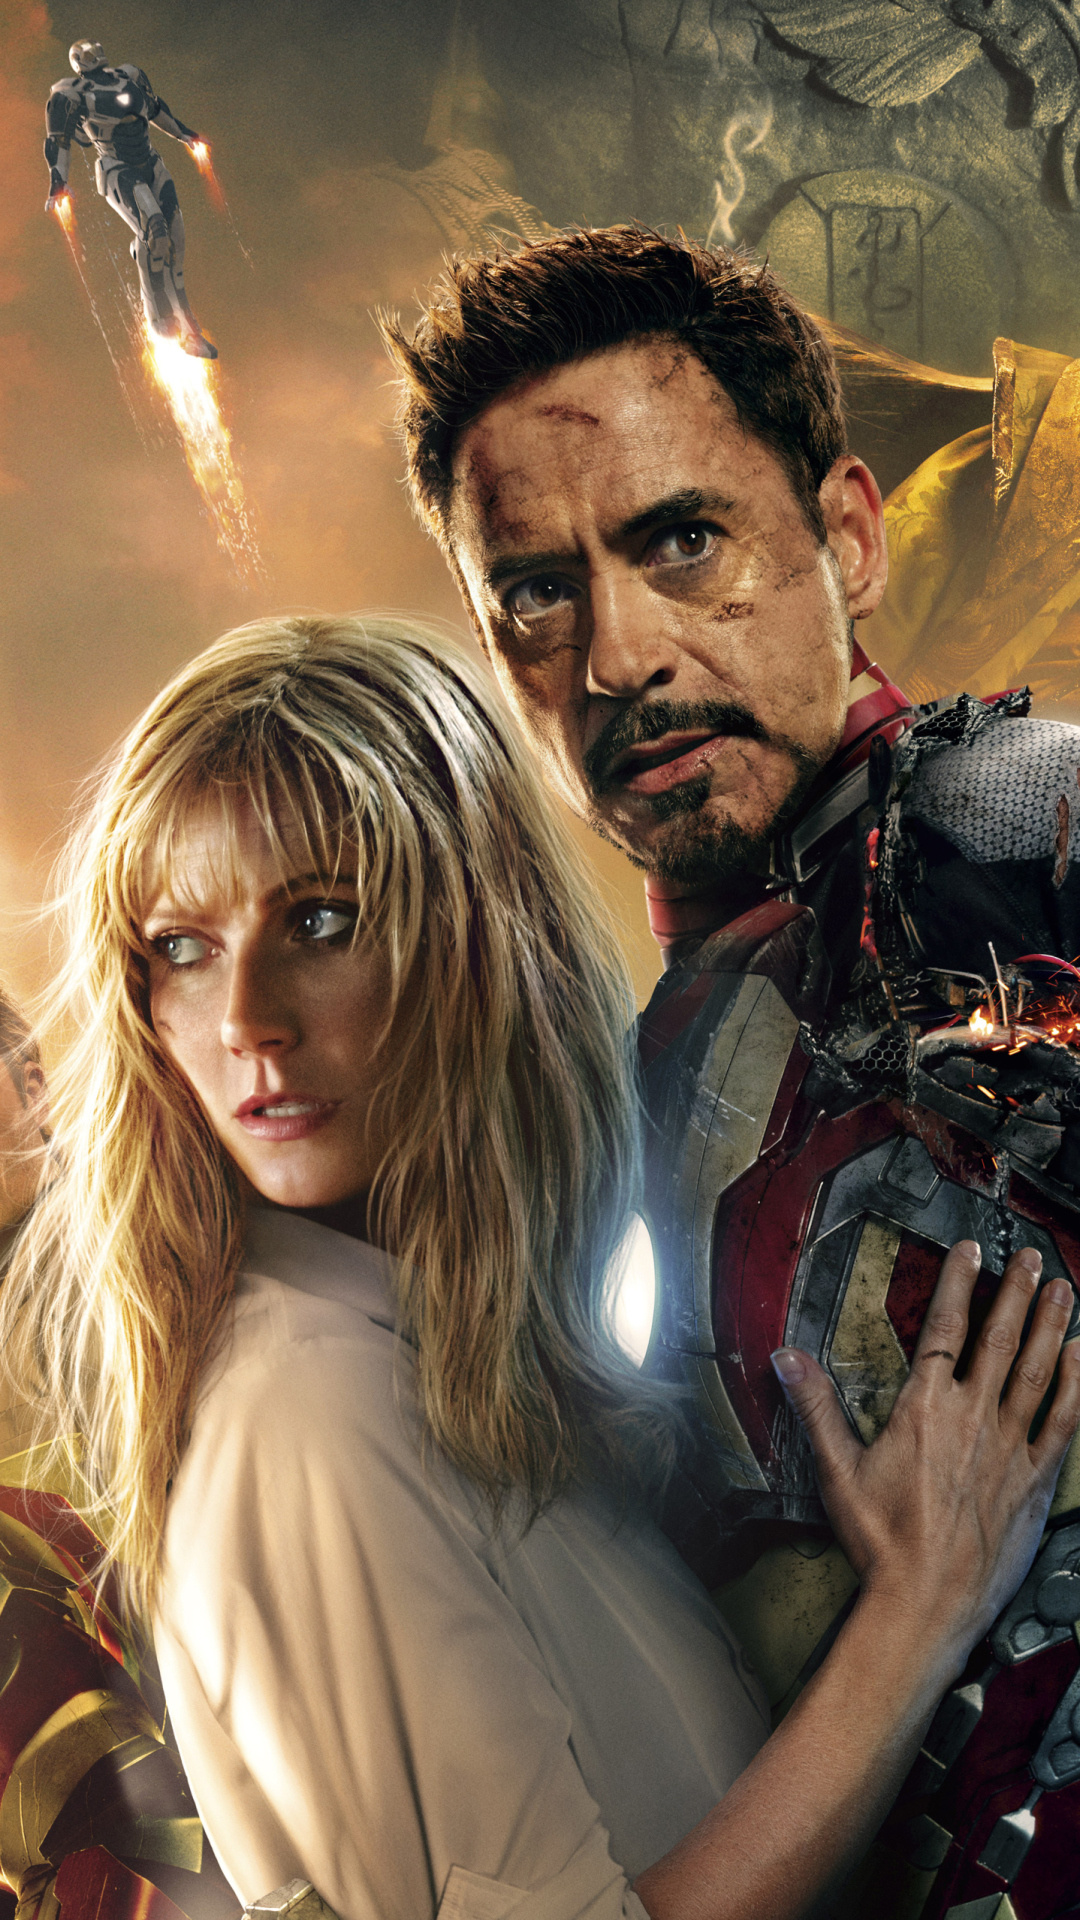 Robert Downey Jr.: Iron Man 3 character, Tony Stark, A genius inventor and billionaire industrialist. 1080x1920 Full HD Wallpaper.